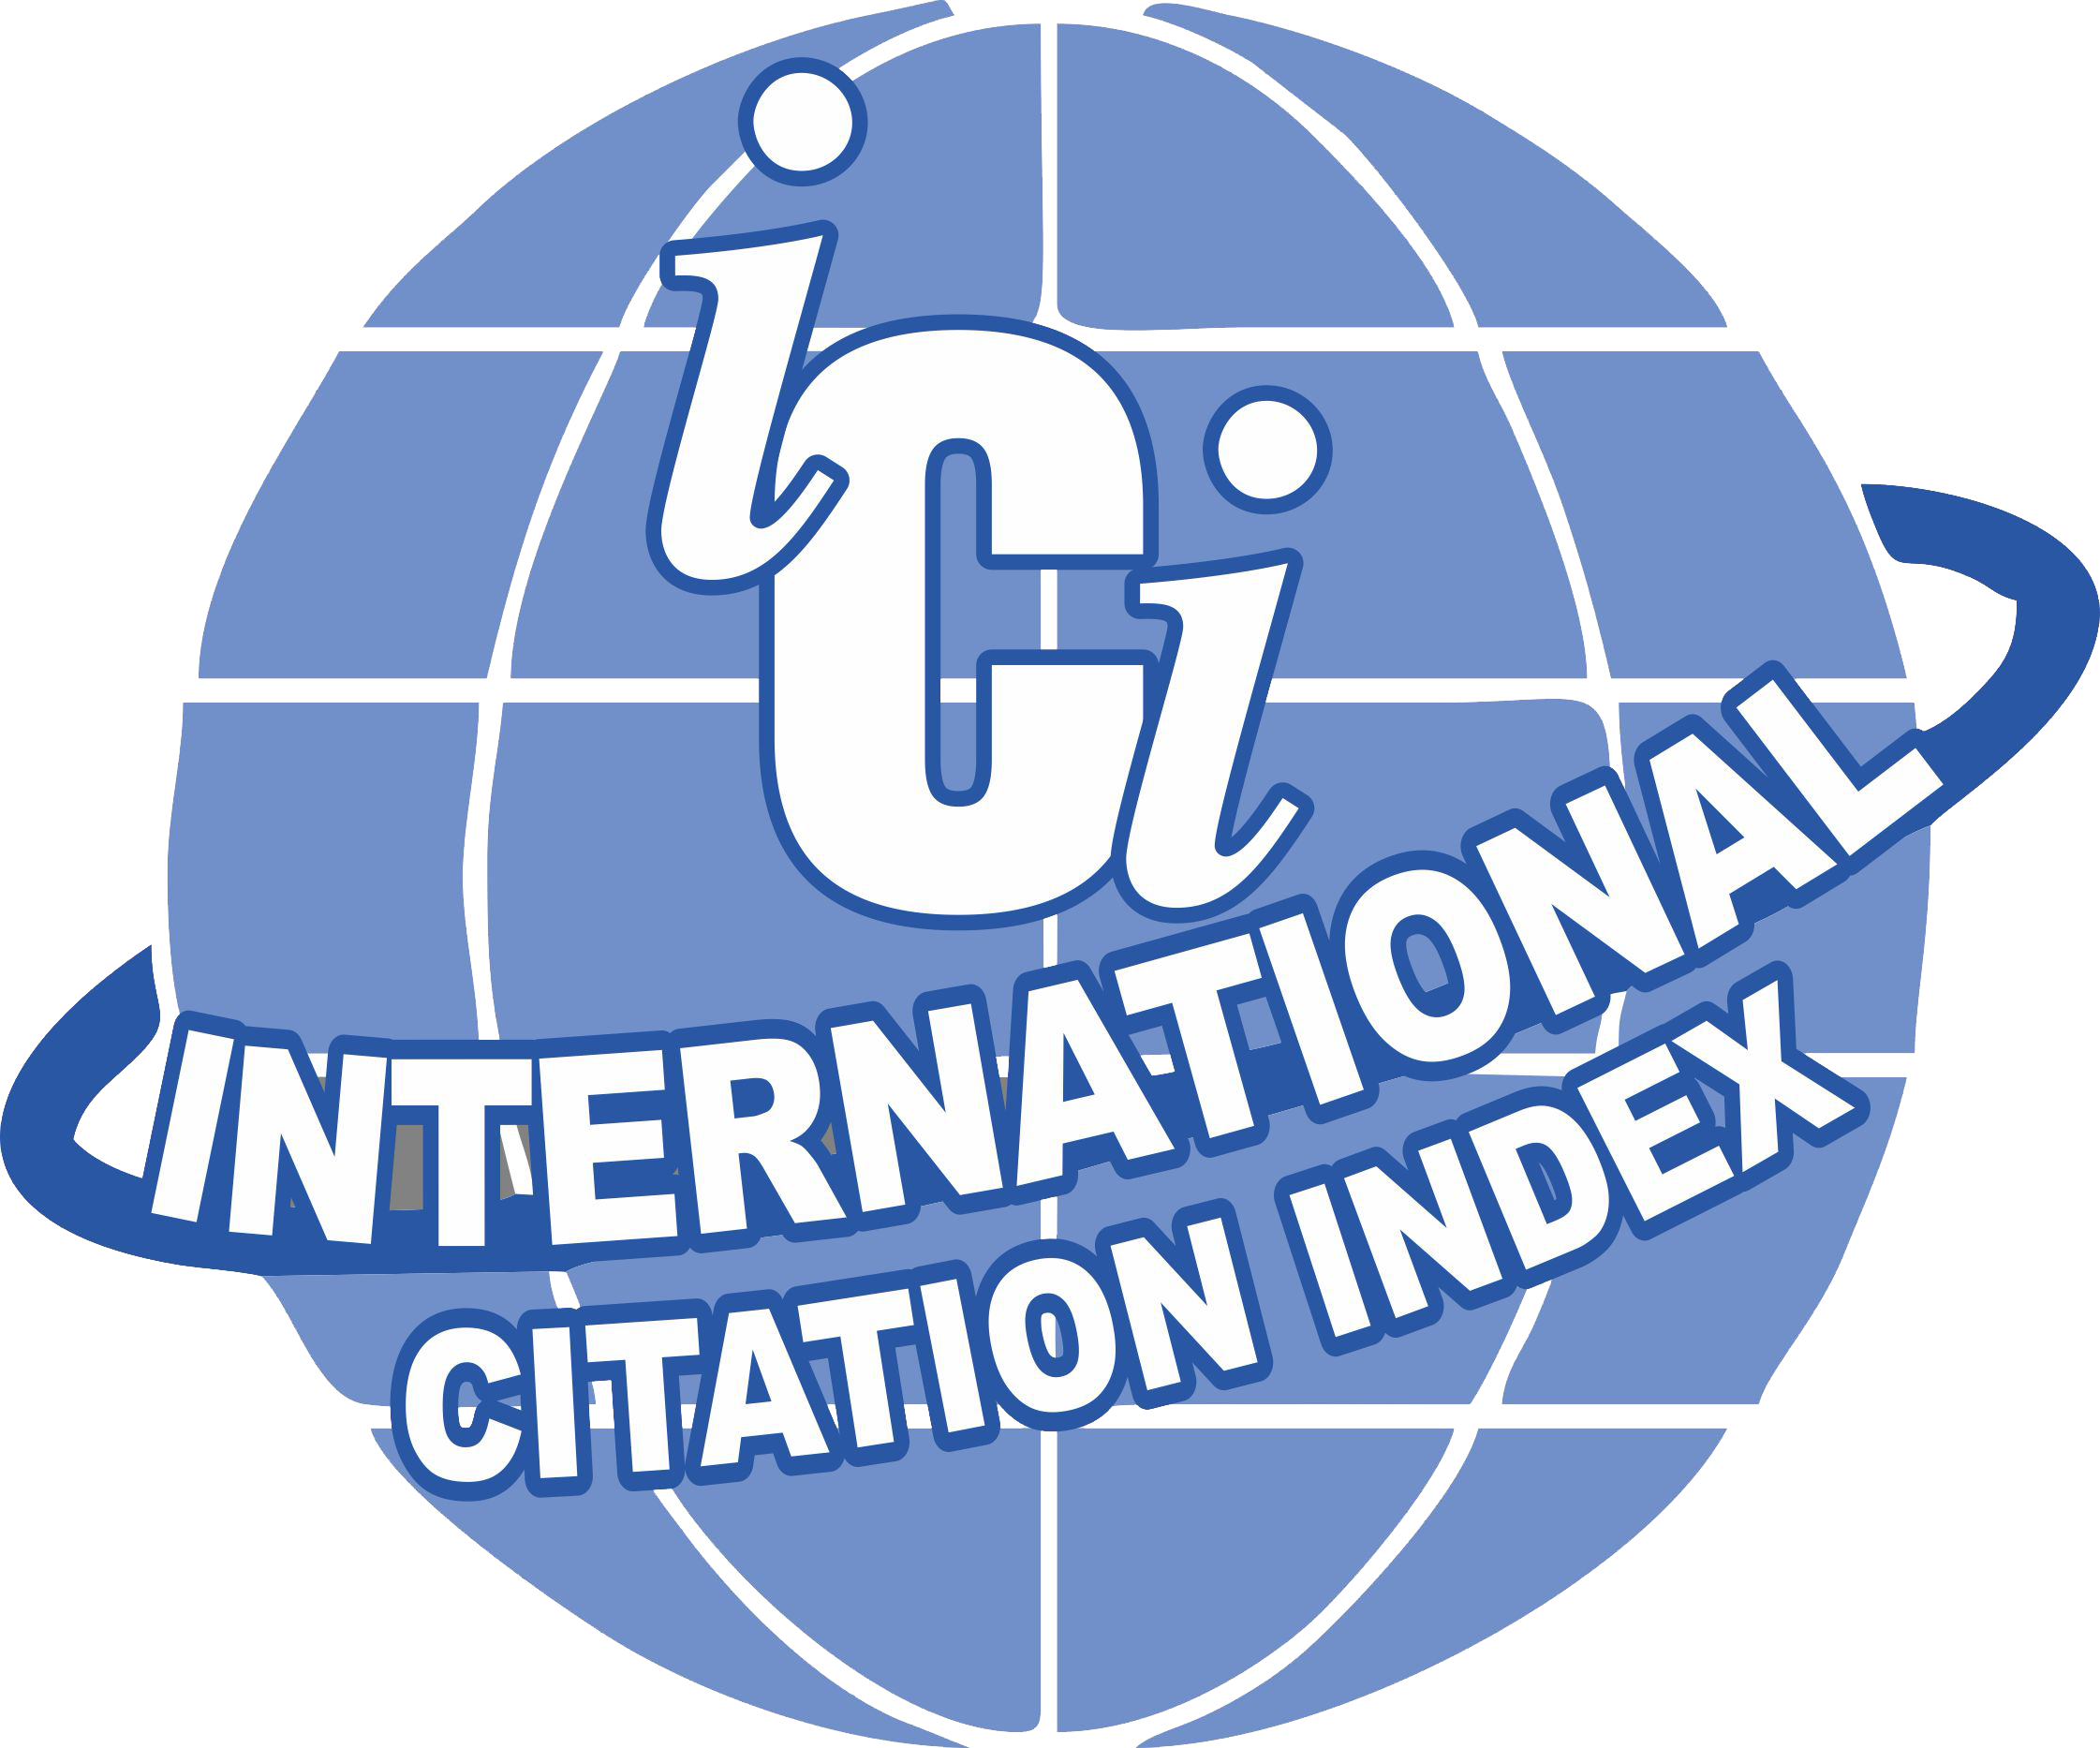 International Citation Index